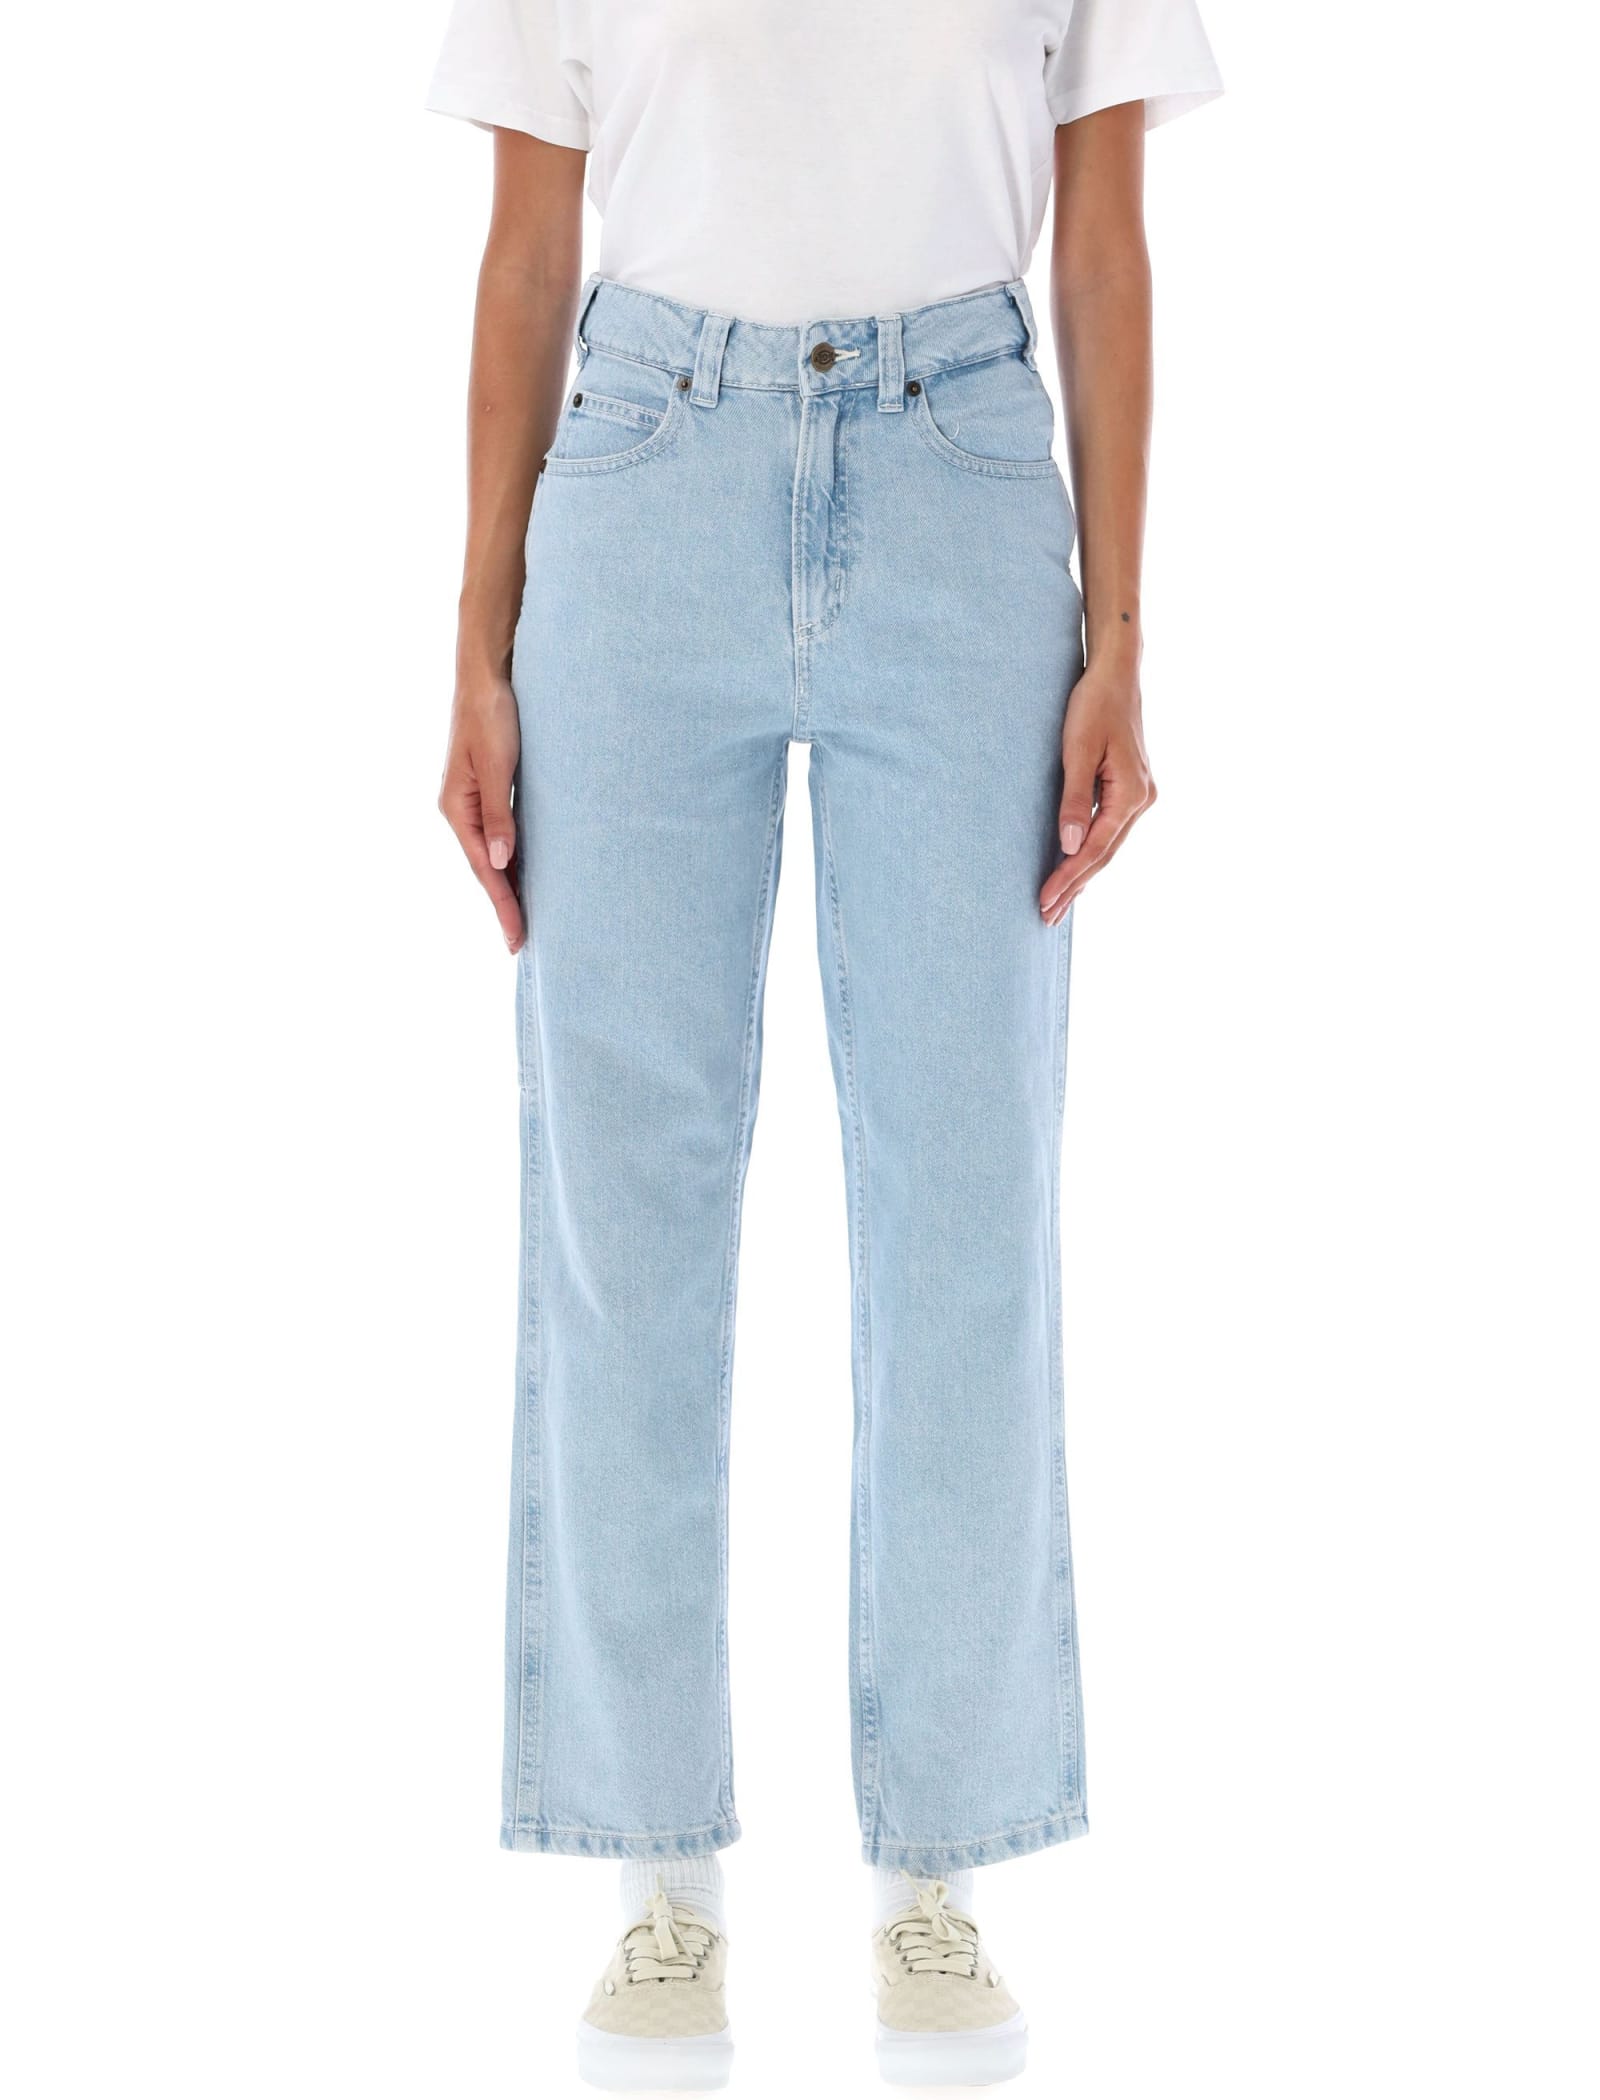 Ellendale Denim Jeans